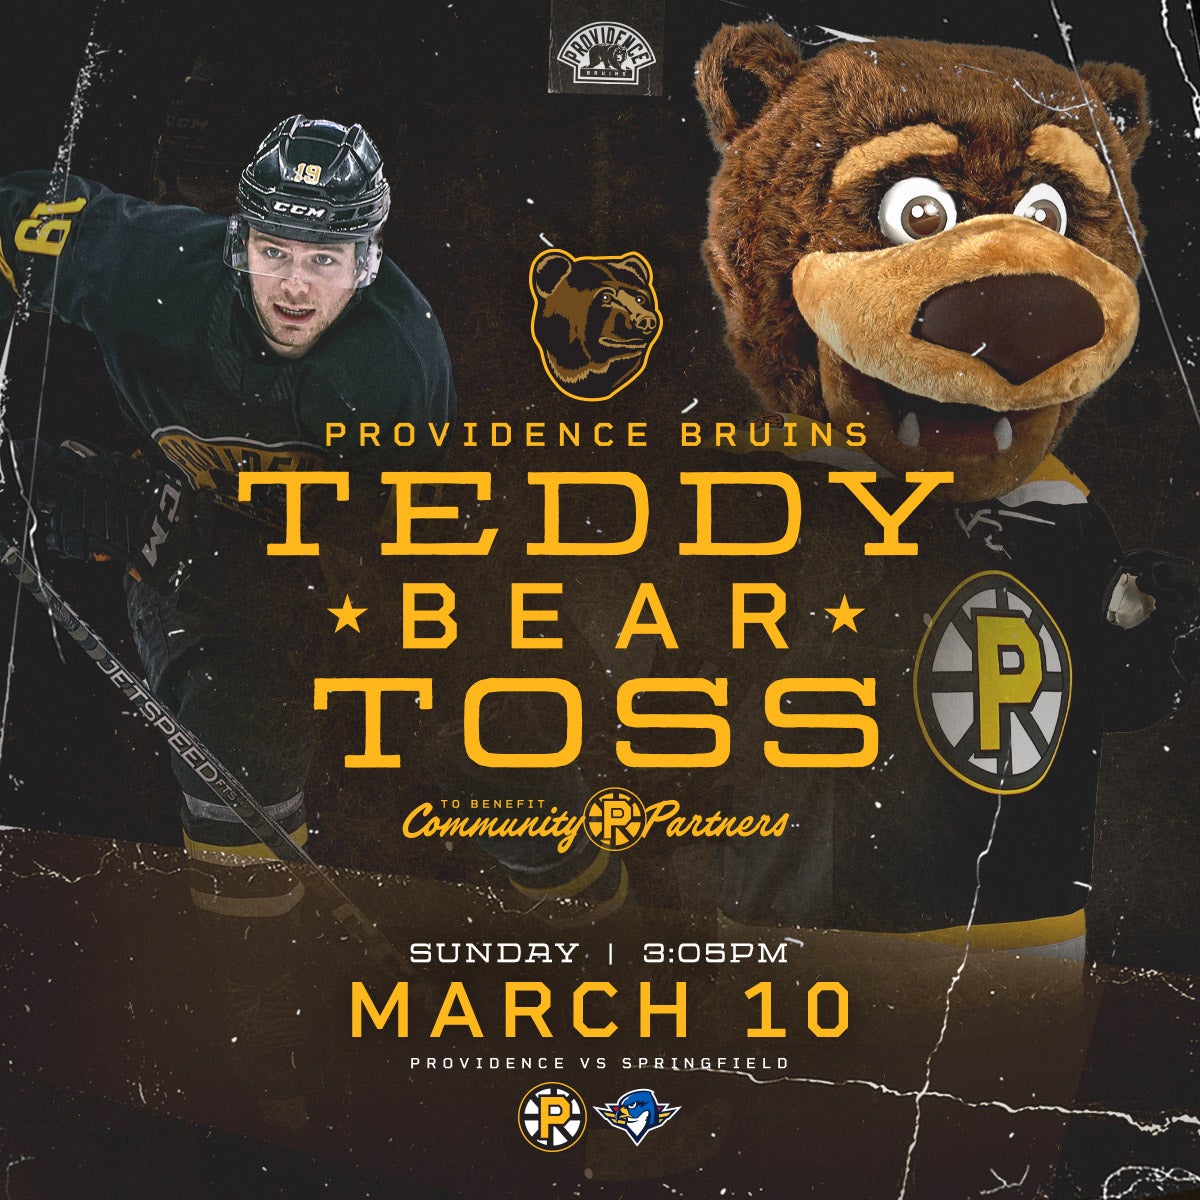 Teddy Bear Toss with the Providence Bruins